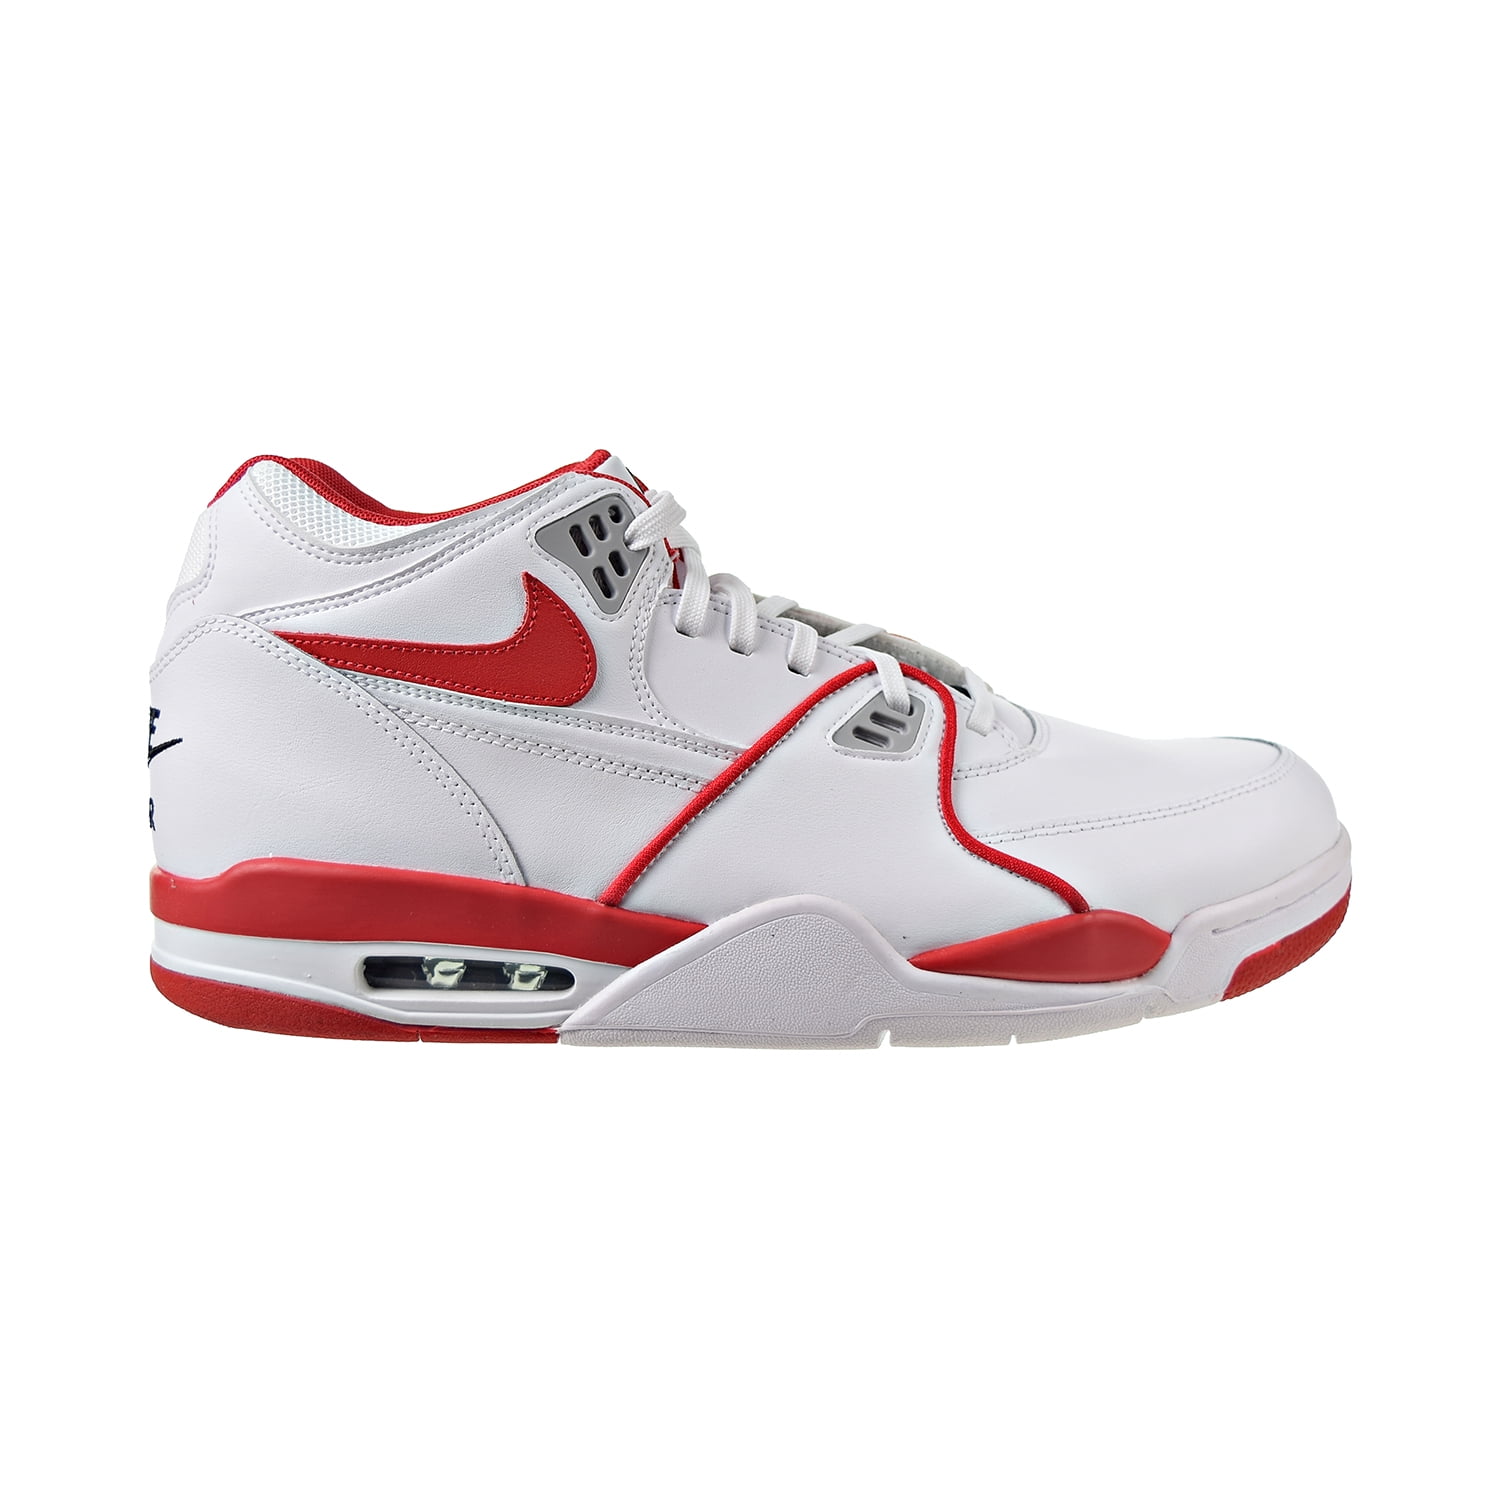 conservatief paneel Ja Nike Air Flight 89 Men's Shoes White-University Red 819665-100 - Walmart.com